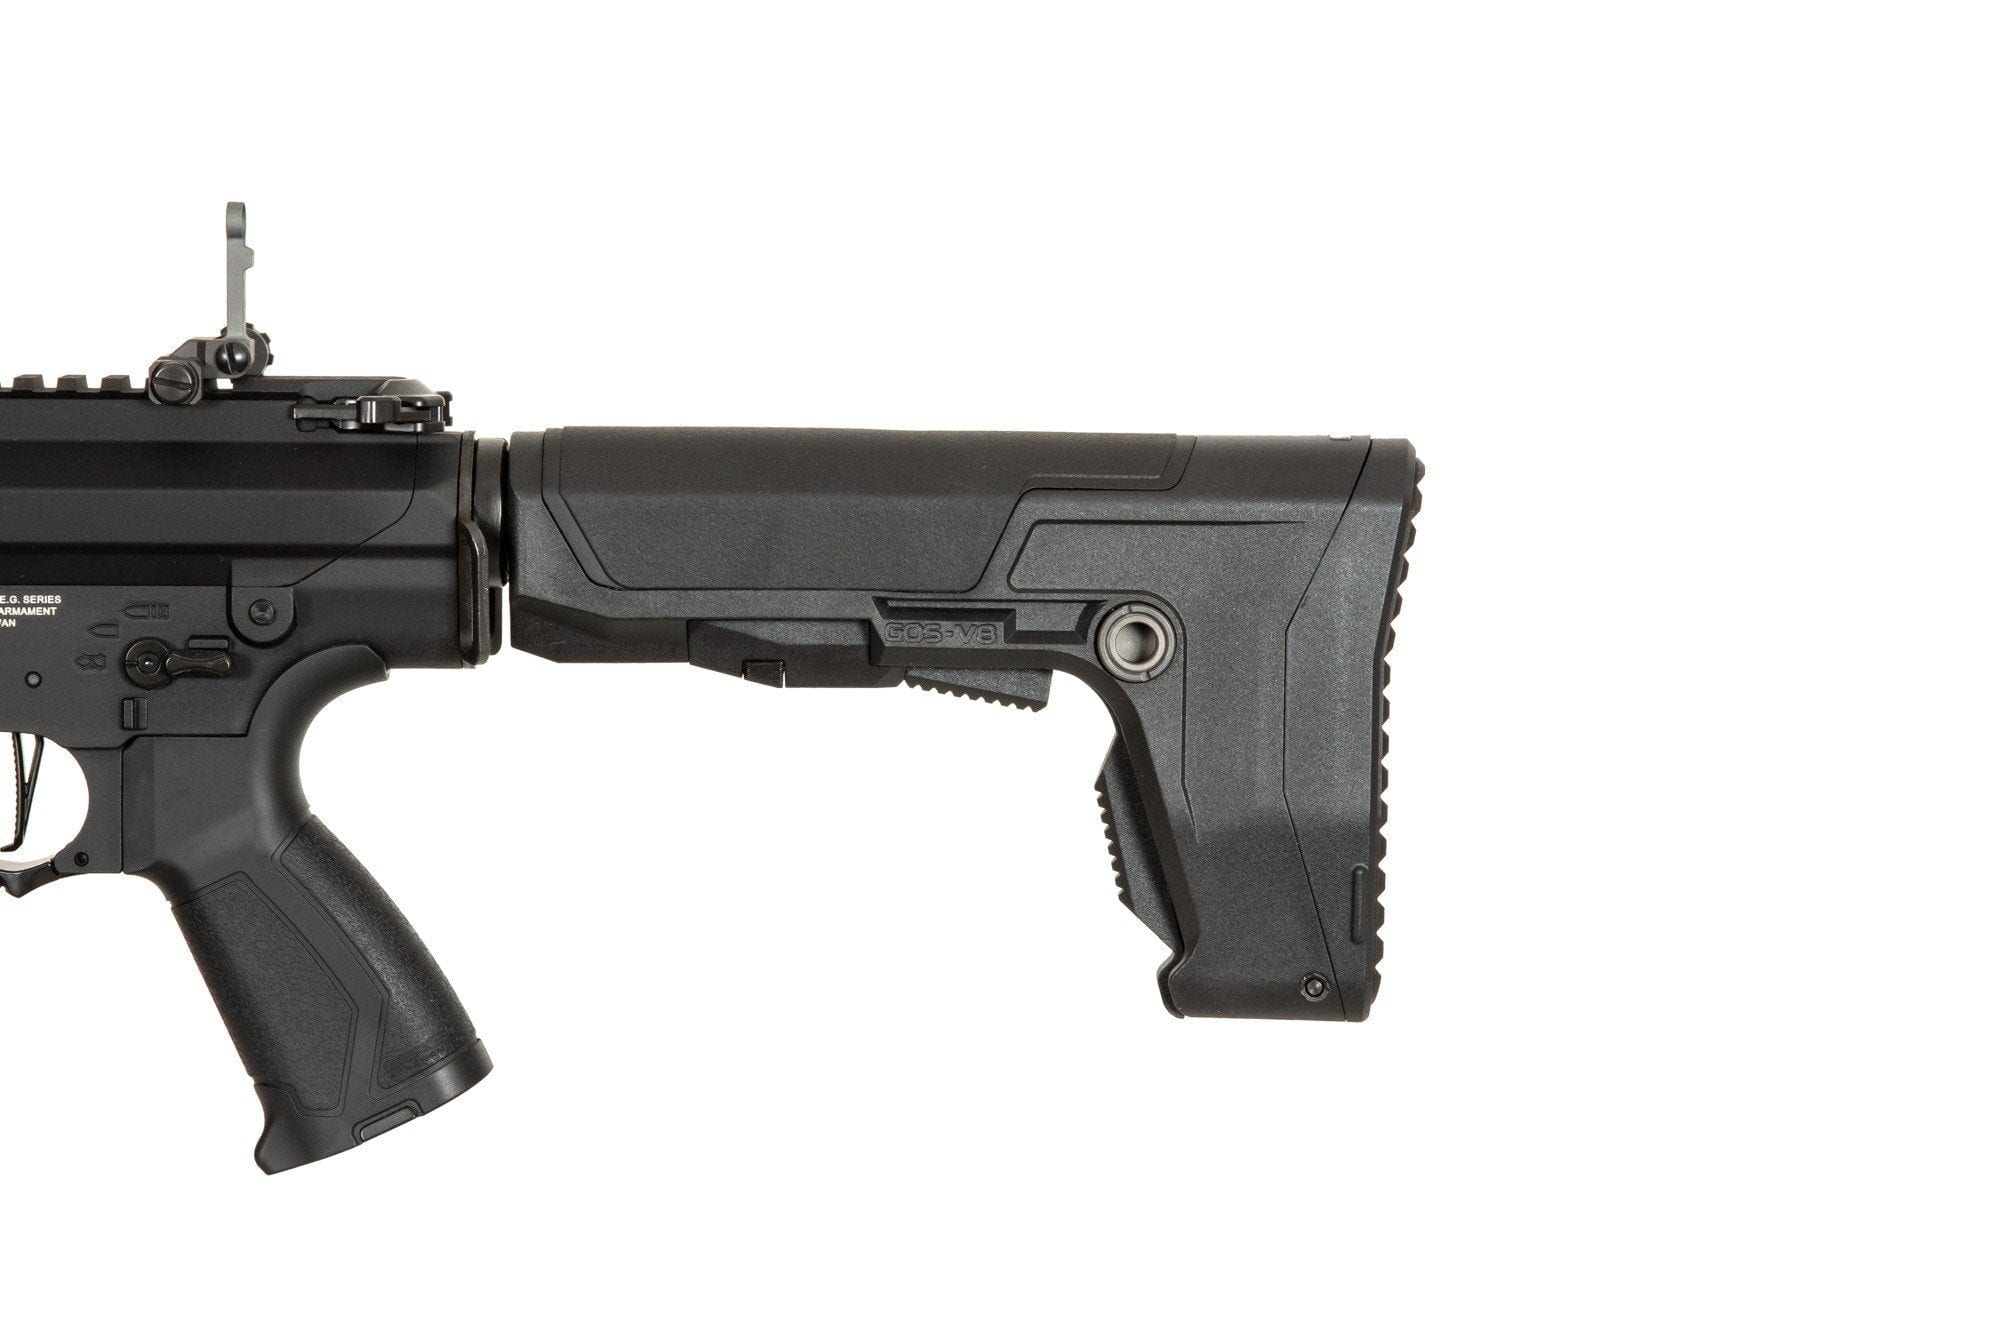 TR16 SBR 308 Mk2 carbine replica by G&G on Airsoft Mania Europe